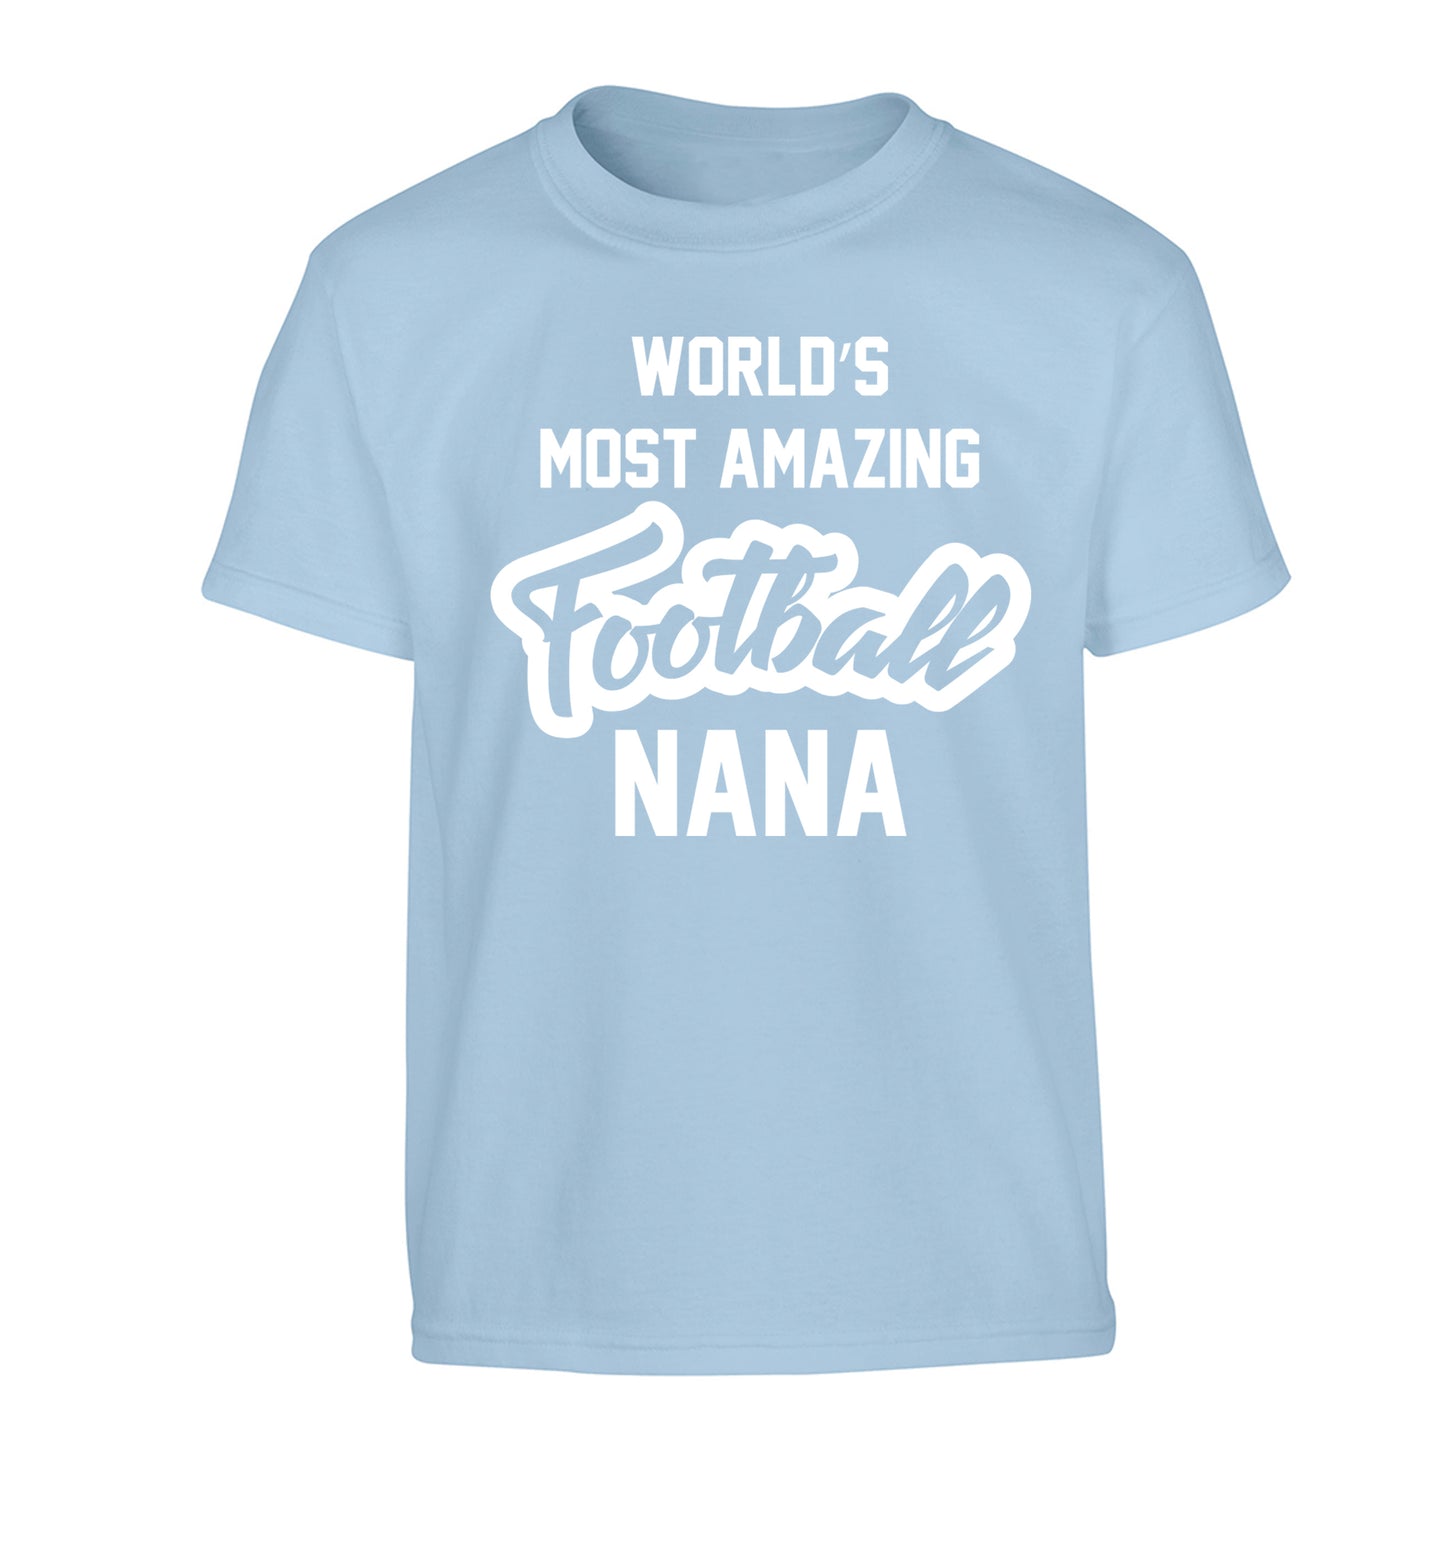 Worlds most amazing football nana Children's light blue Tshirt 12-14 Years